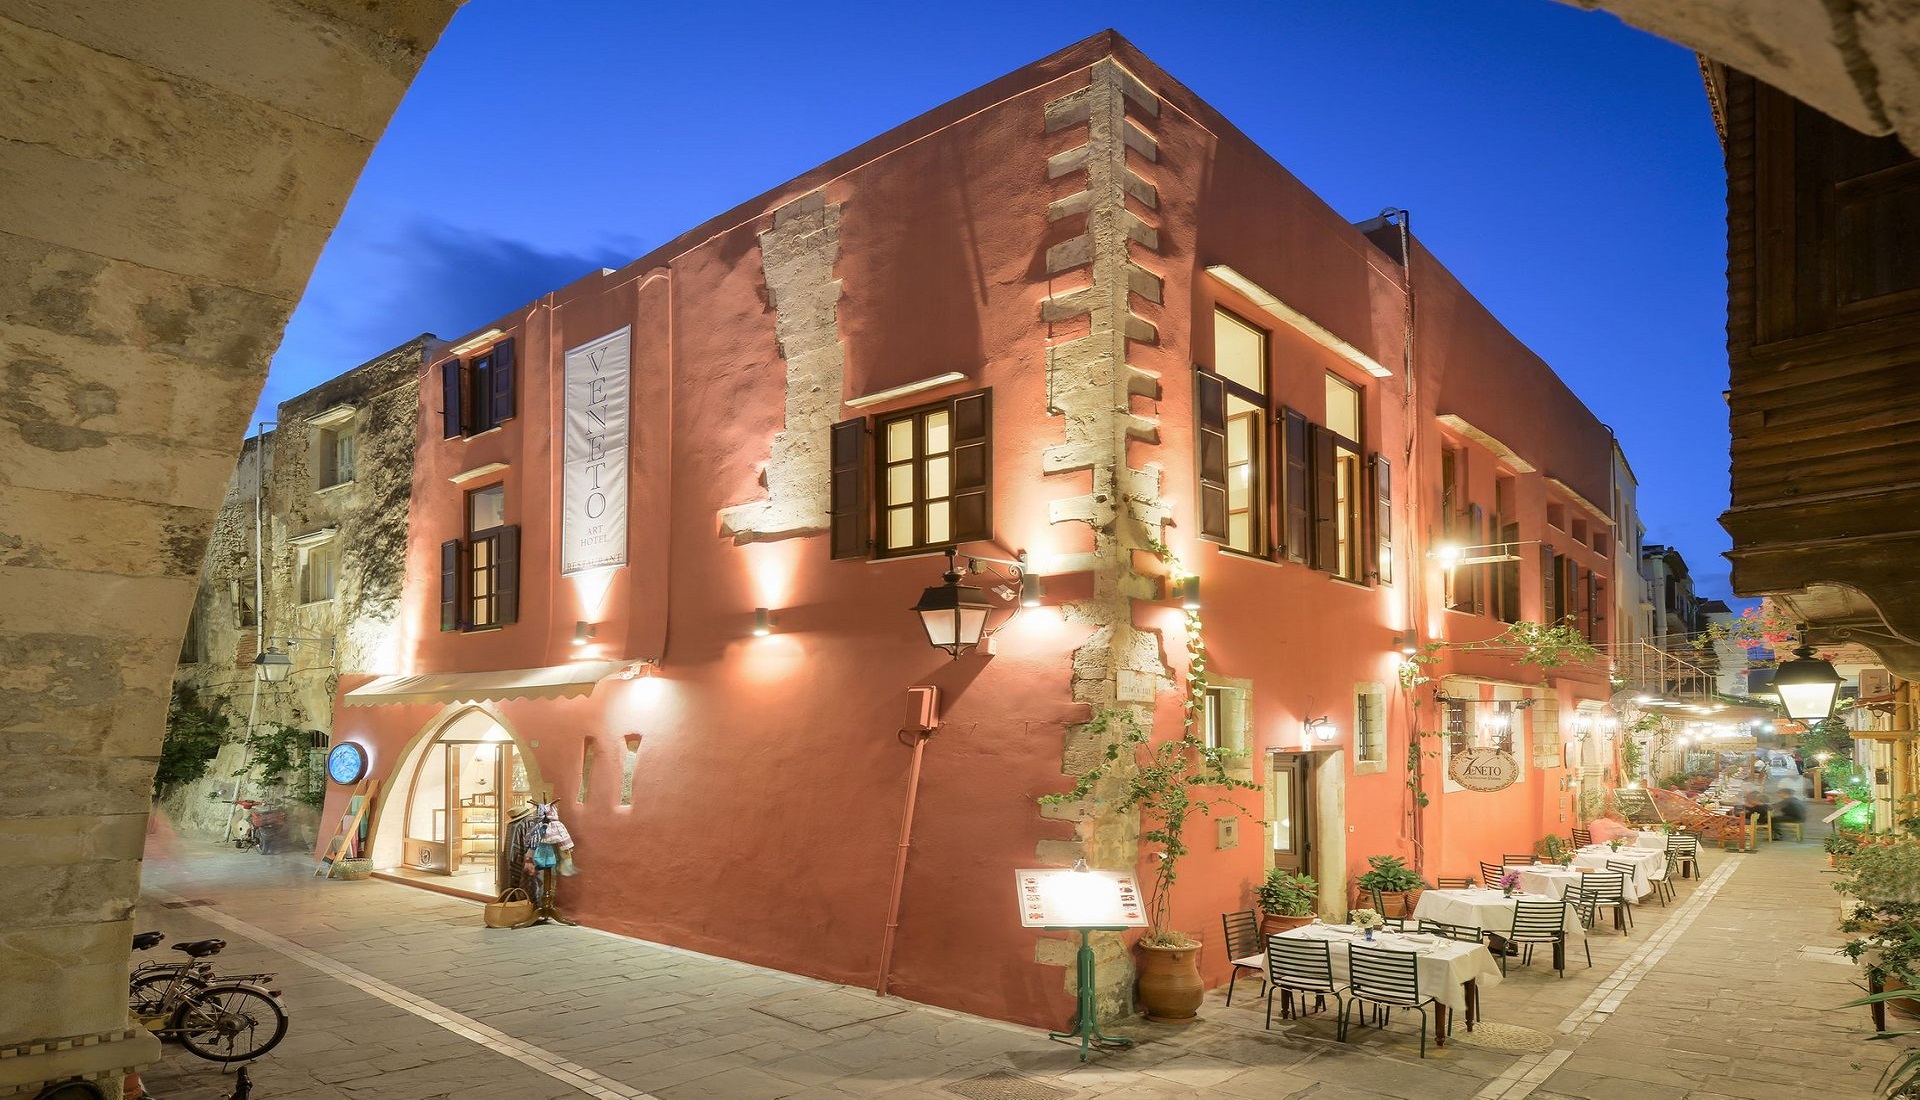 4* Veneto Hotel - Ρέθυμνο, Κρήτη ✦ 2 Ημέρες (1 Διανυκτέρευση)